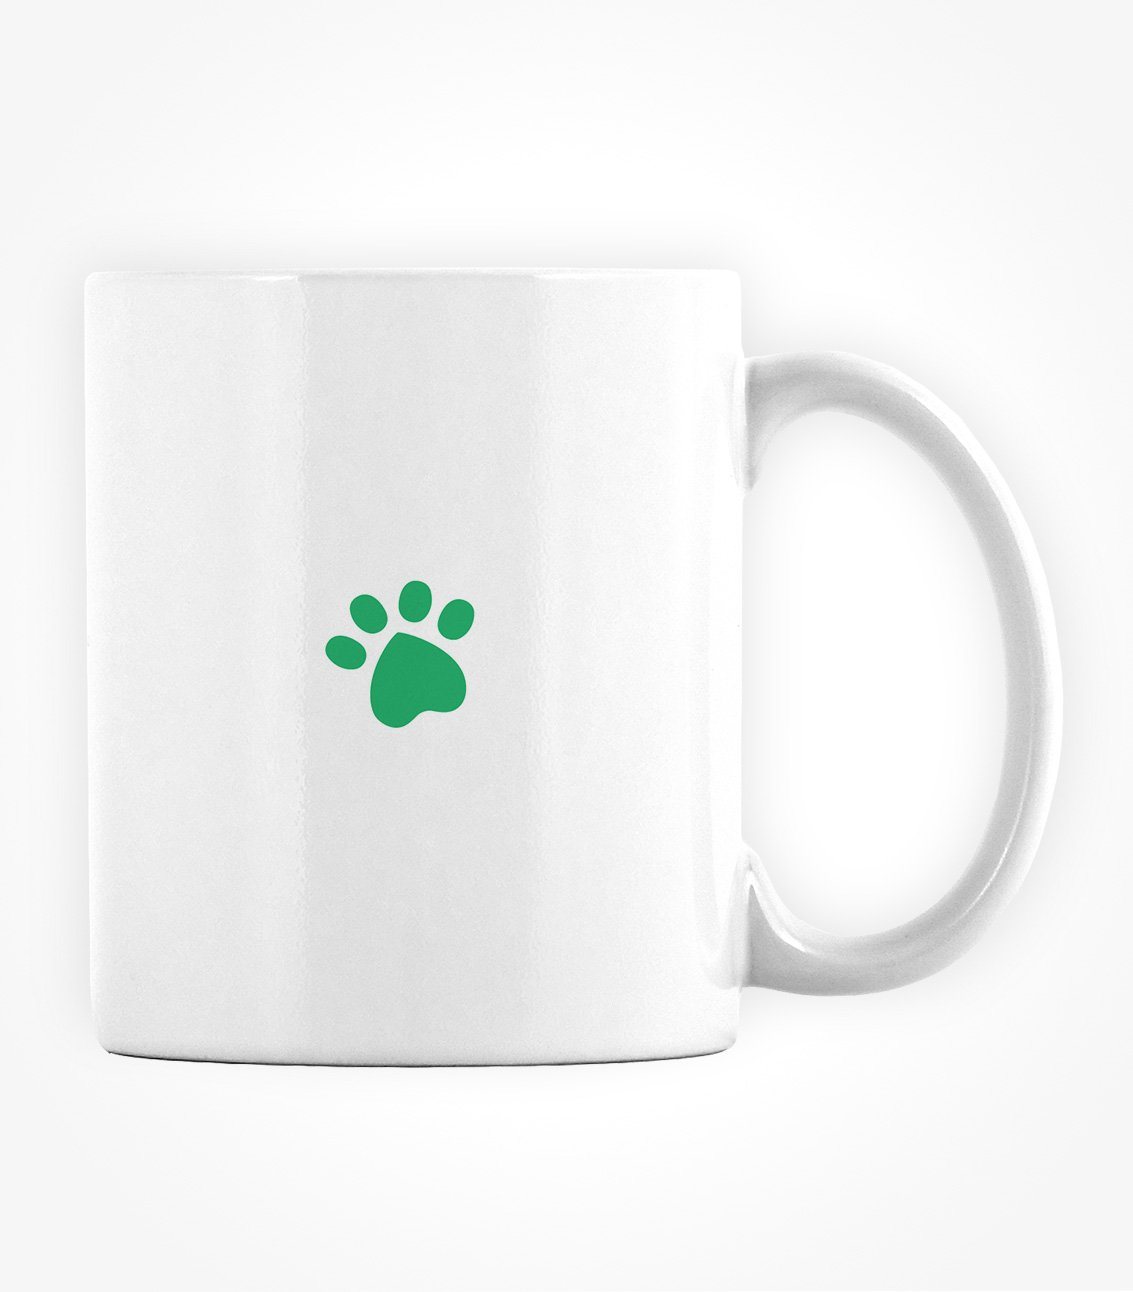 'Drink Coffee. Pet Cat. Repeat' Mug Mug Rover Store 